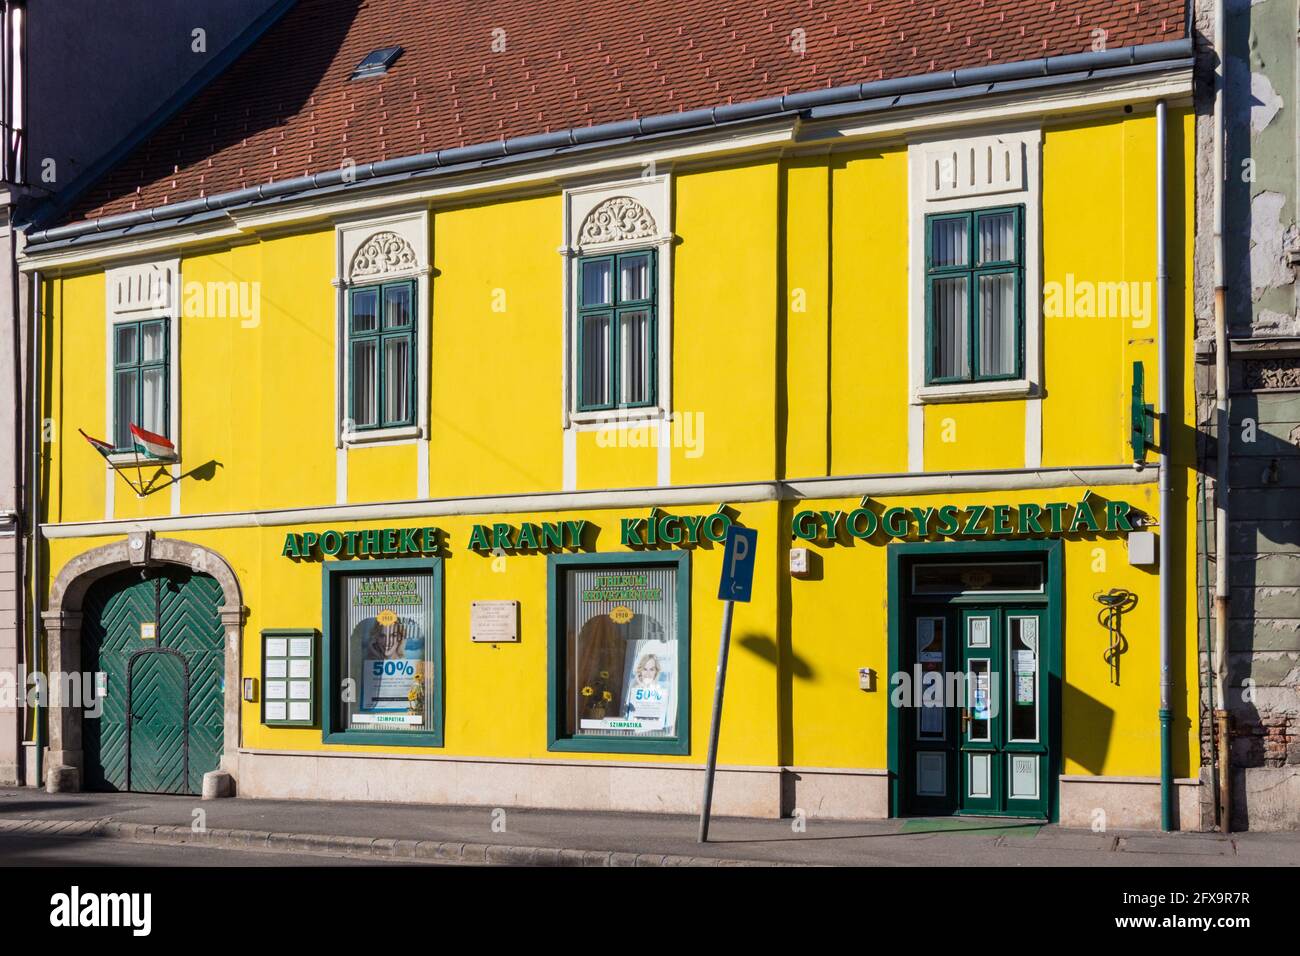 Medieval building of the Arany Kigyo Gyogyszertar (Golden Snake Pharmacy),  Sopron, Hungary Stock Photo - Alamy